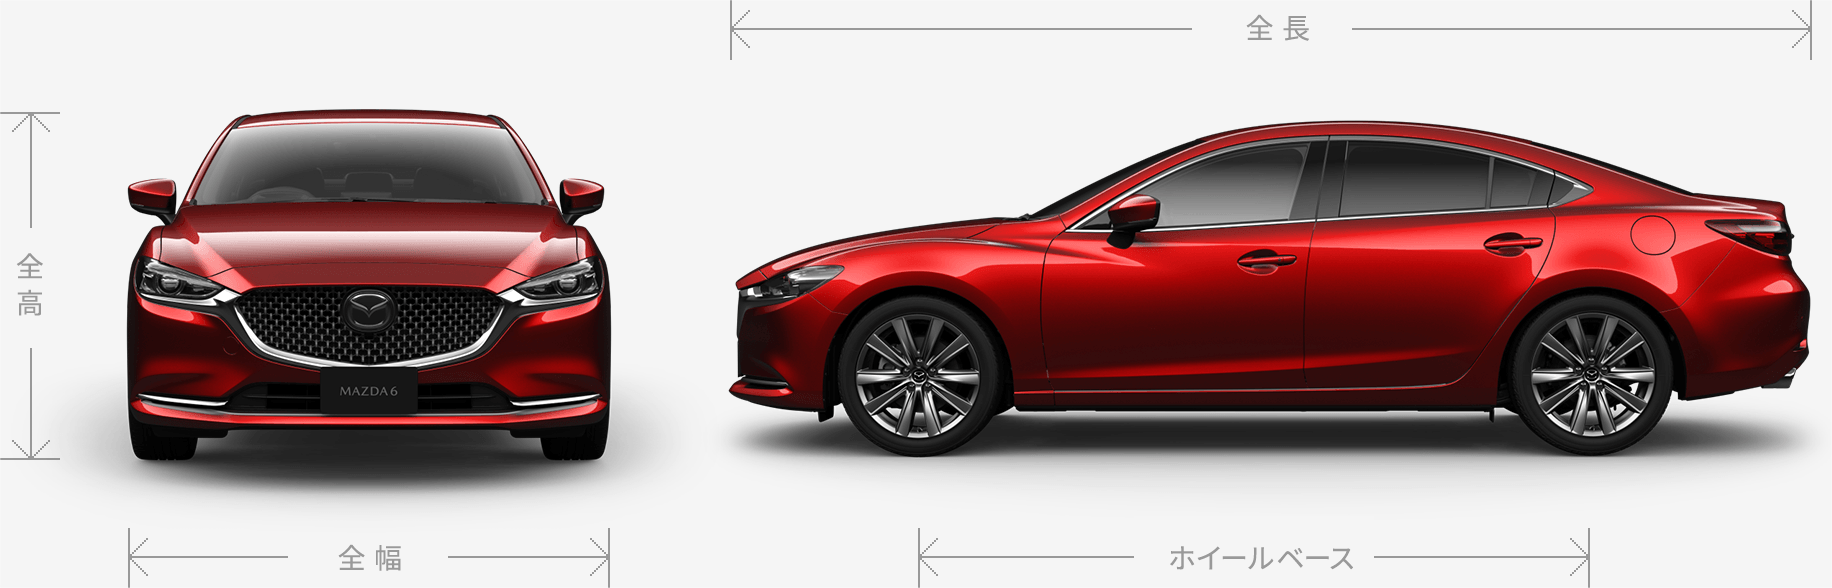 Mazda6 グレード 価格 ディーゼル ガソリンラインナップ マツダ